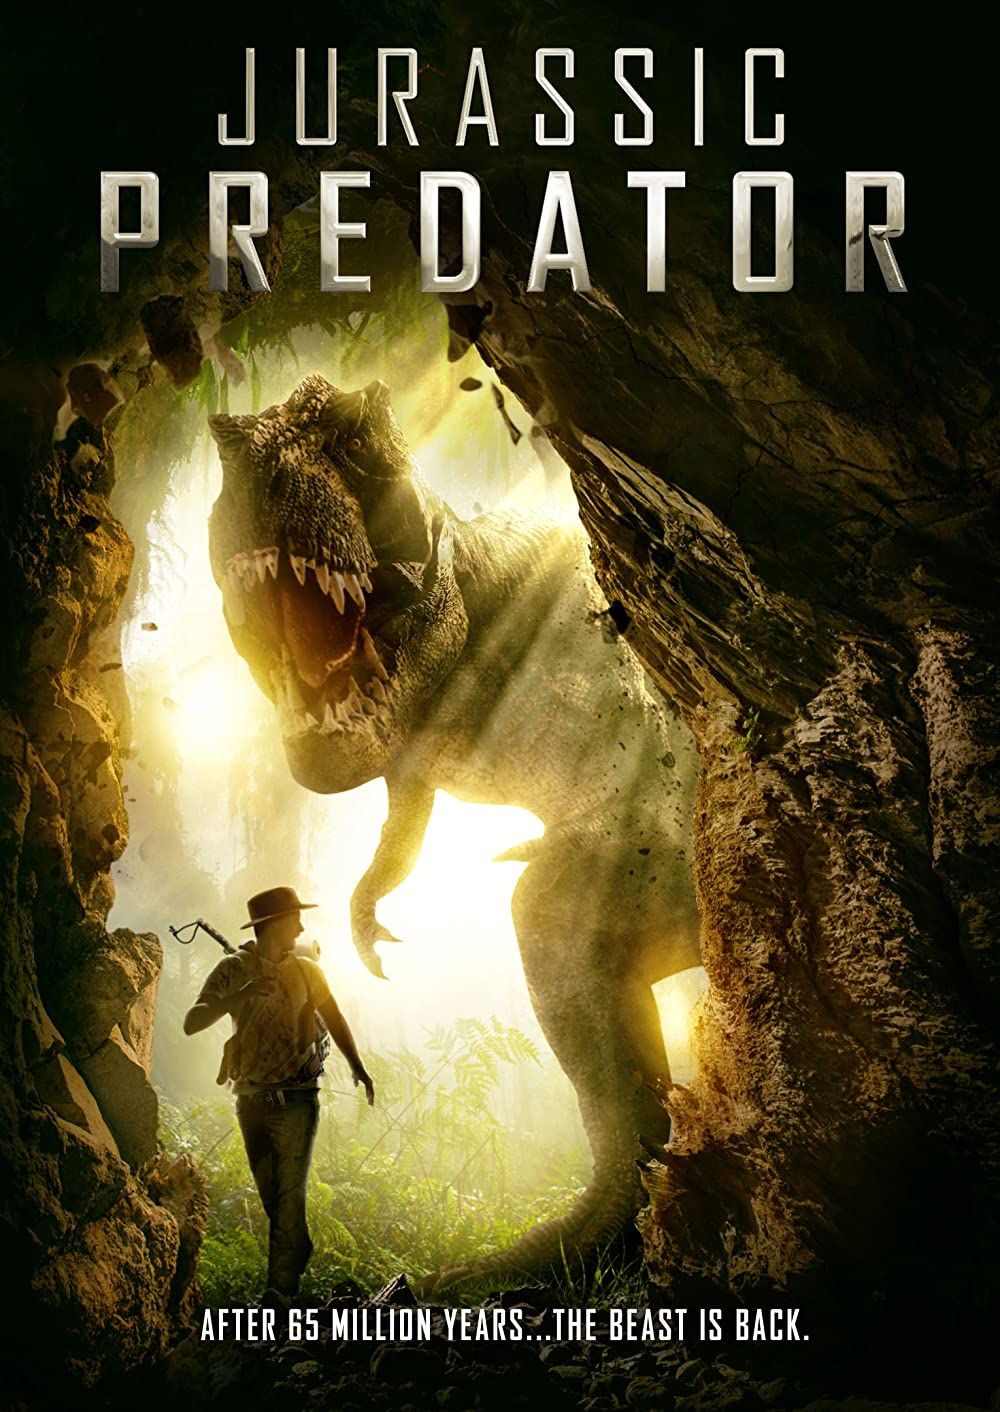 Jurassic Predator (2018) Hindi Dubbed HDRip download full movie